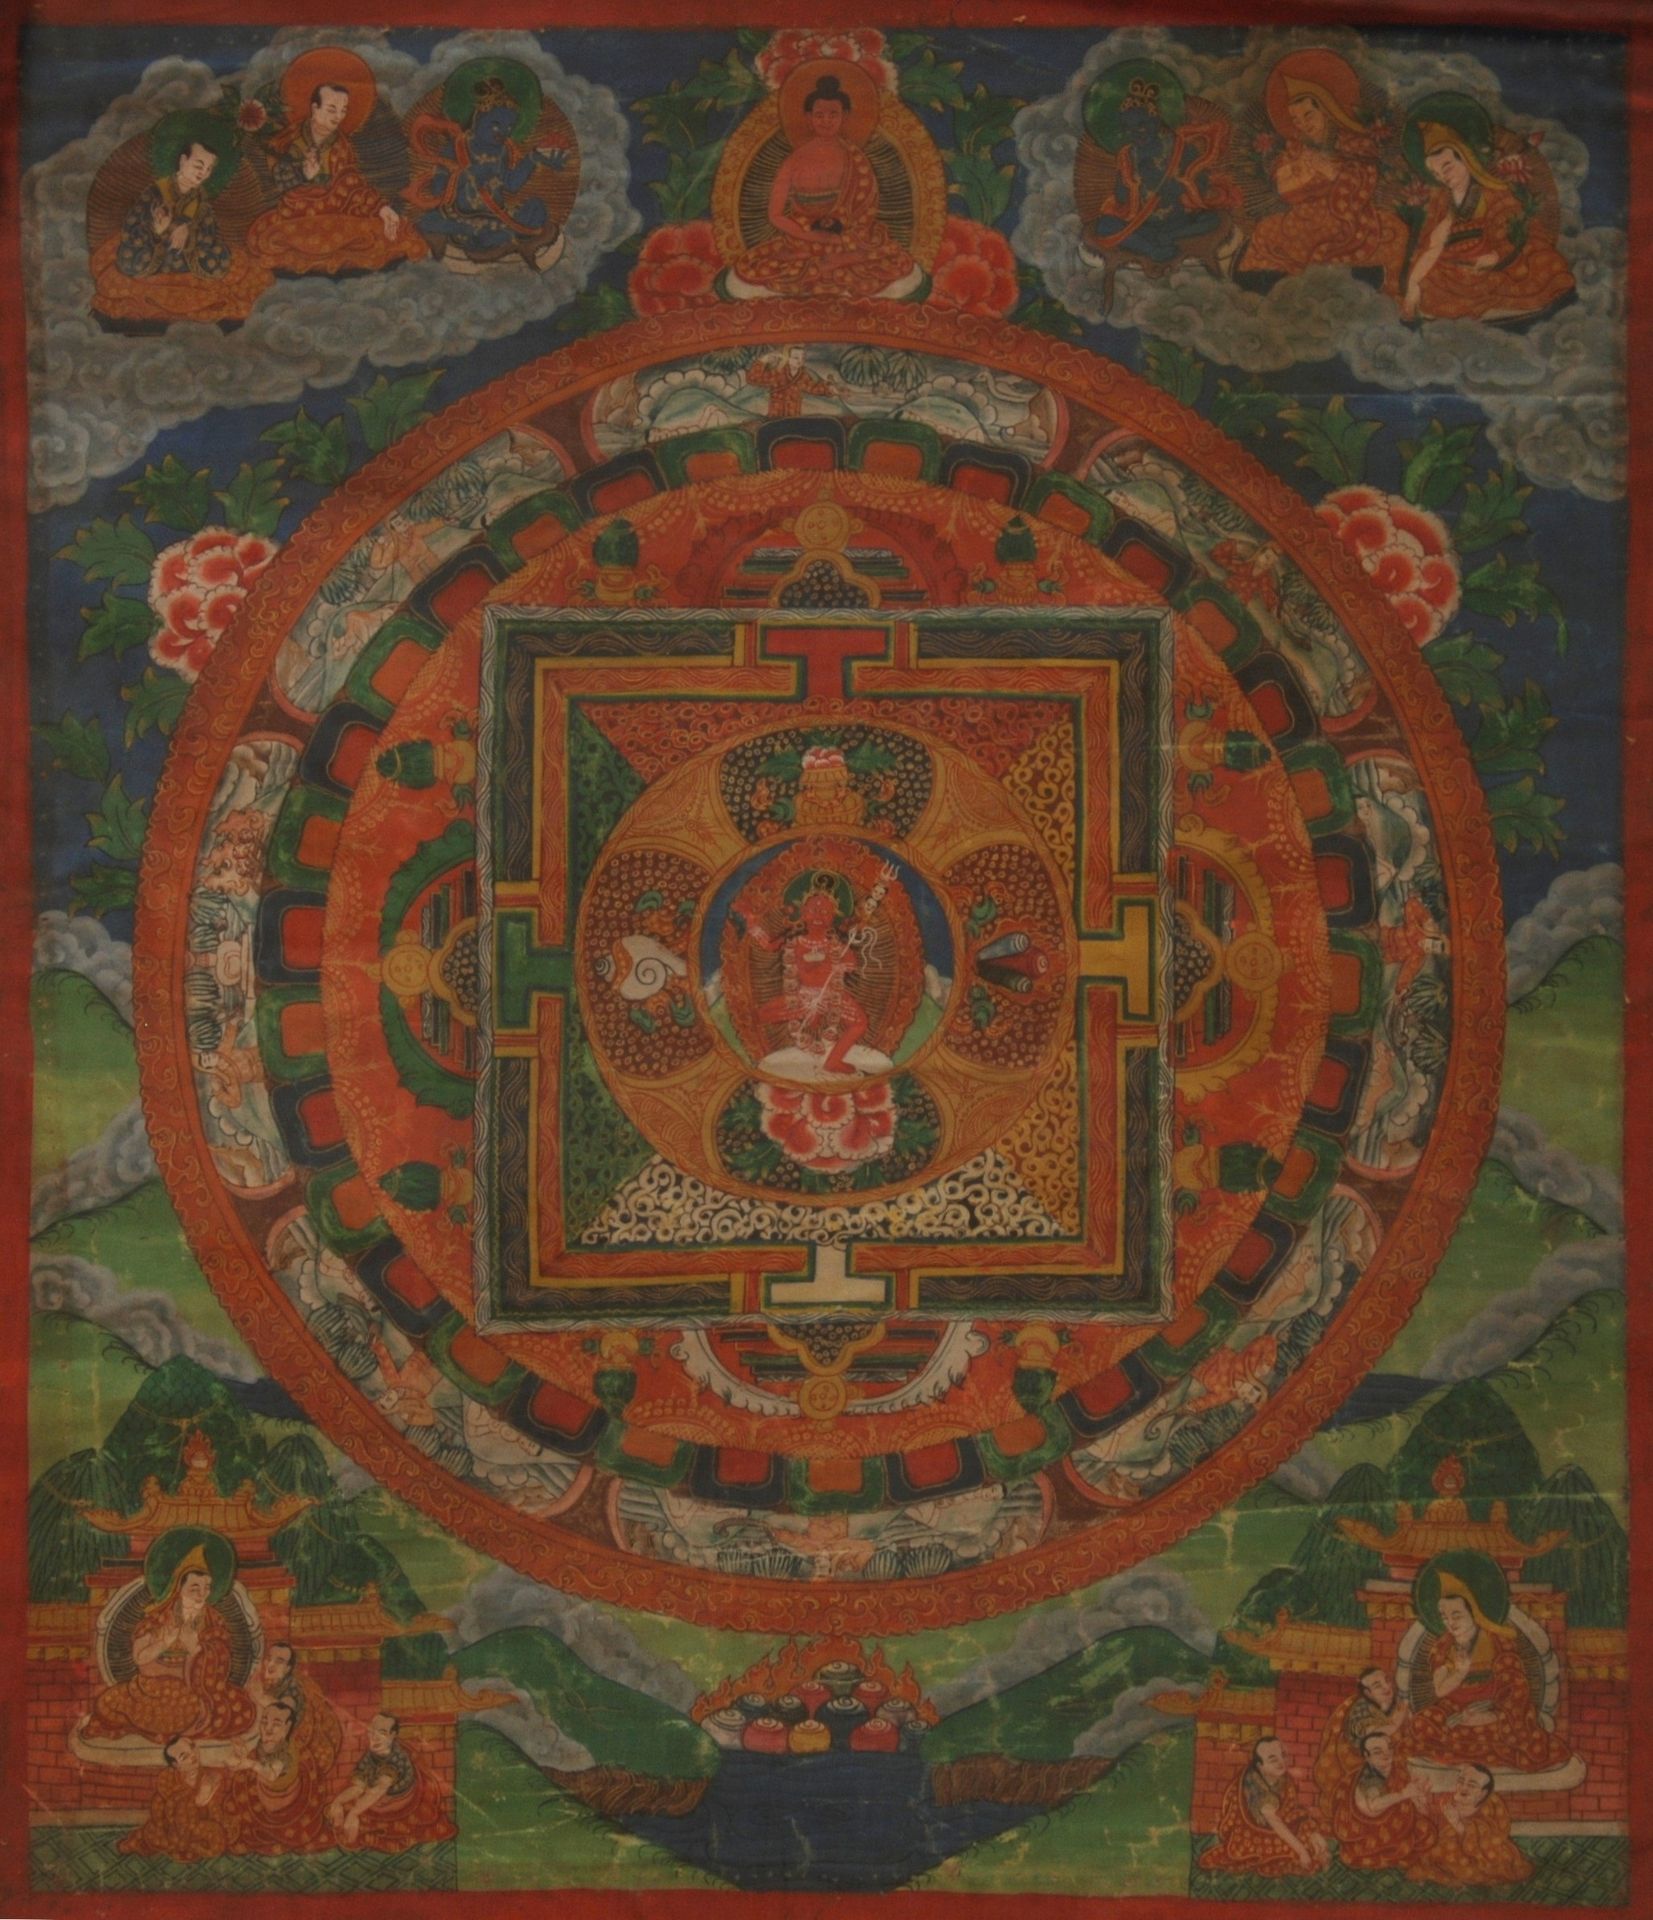 Thangka tibetana Tibetan Thangka
Size: cm 40x48